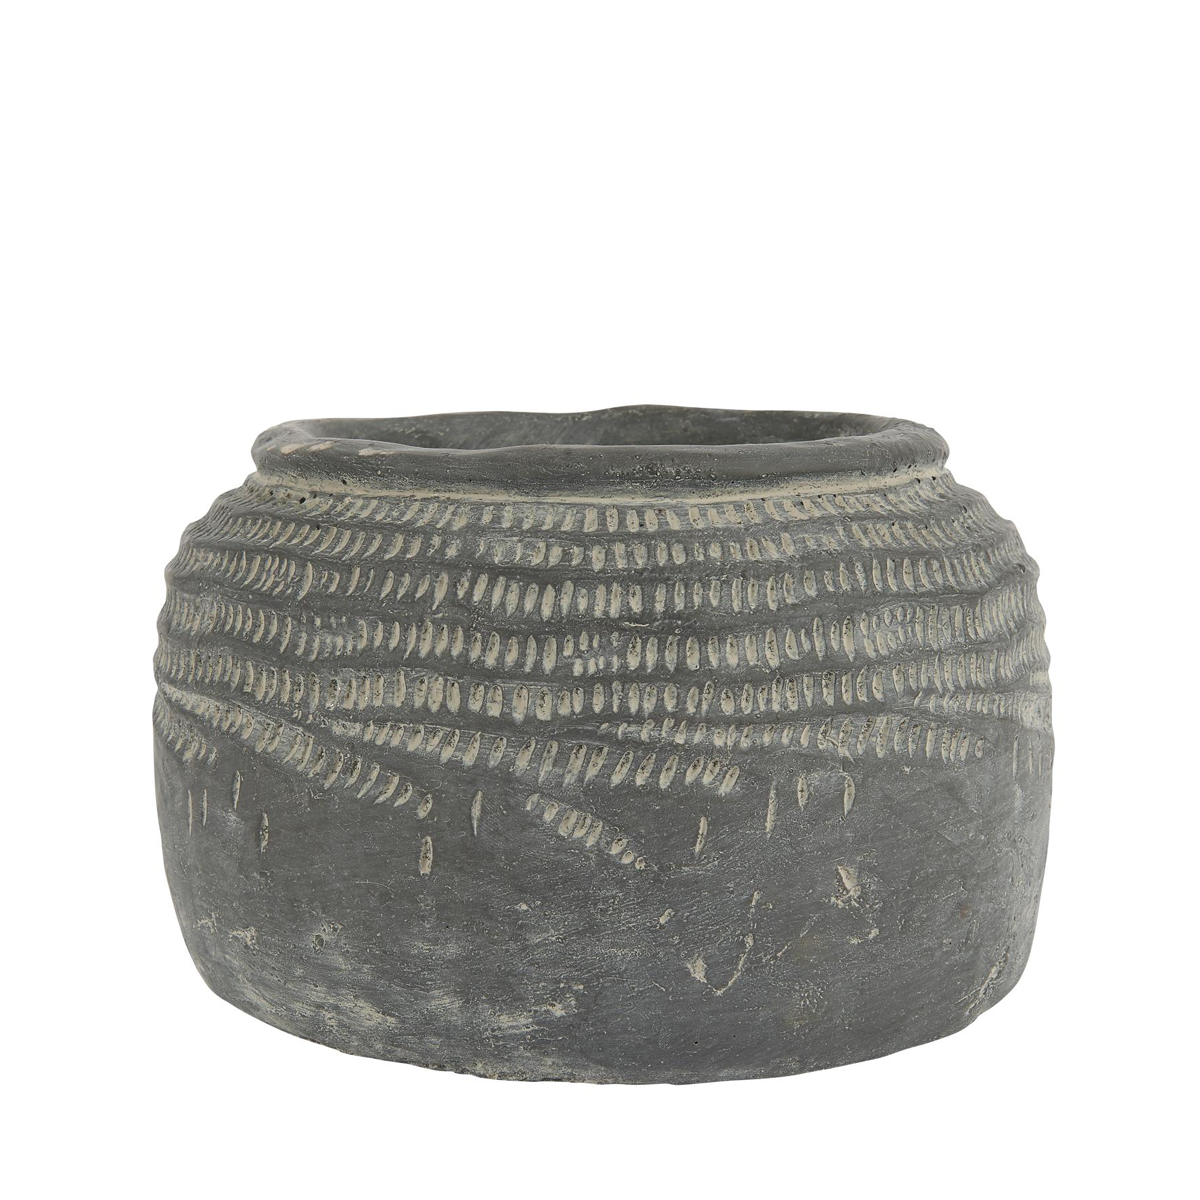 IB Laursen cement Pot Cleopatra 18 cm diameter 13104-18